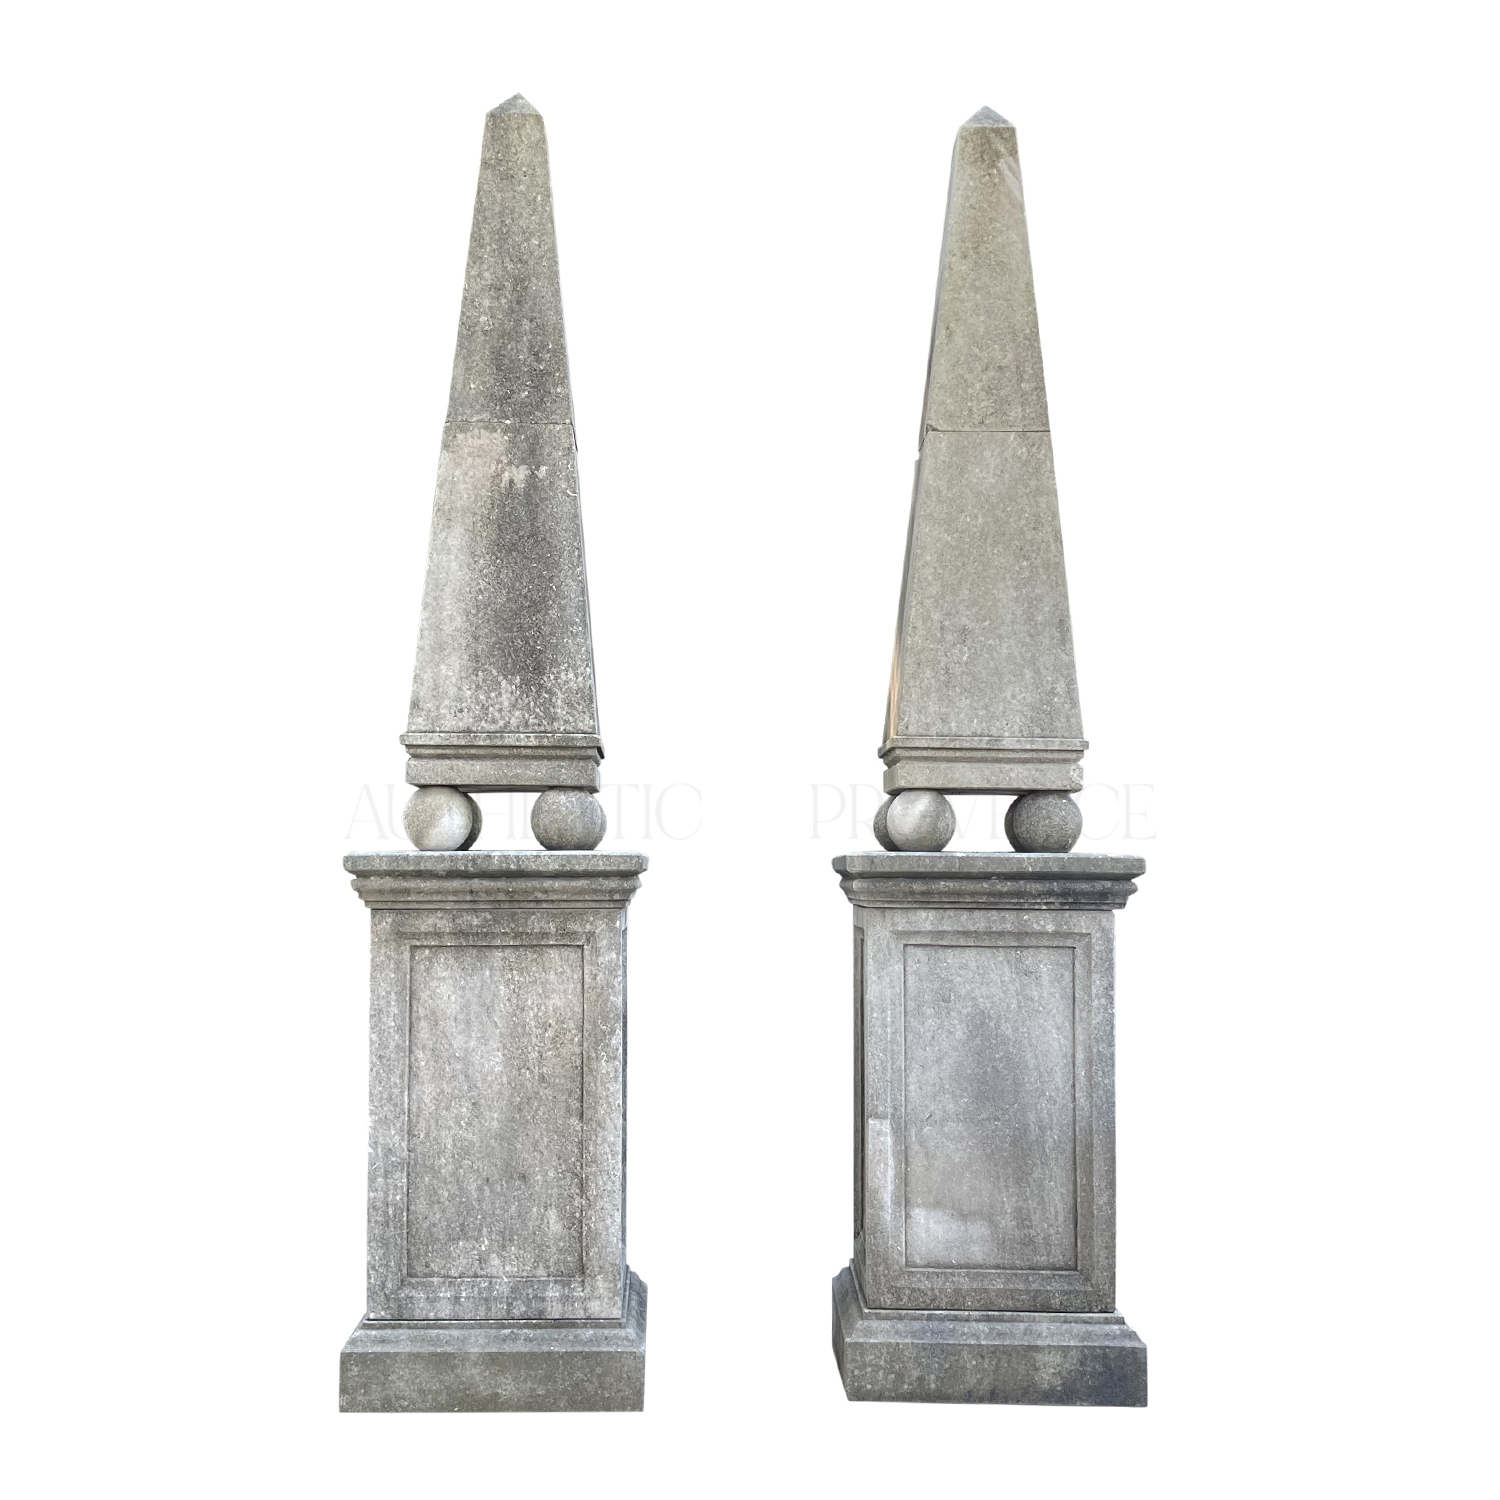 Pair of French Obelisks